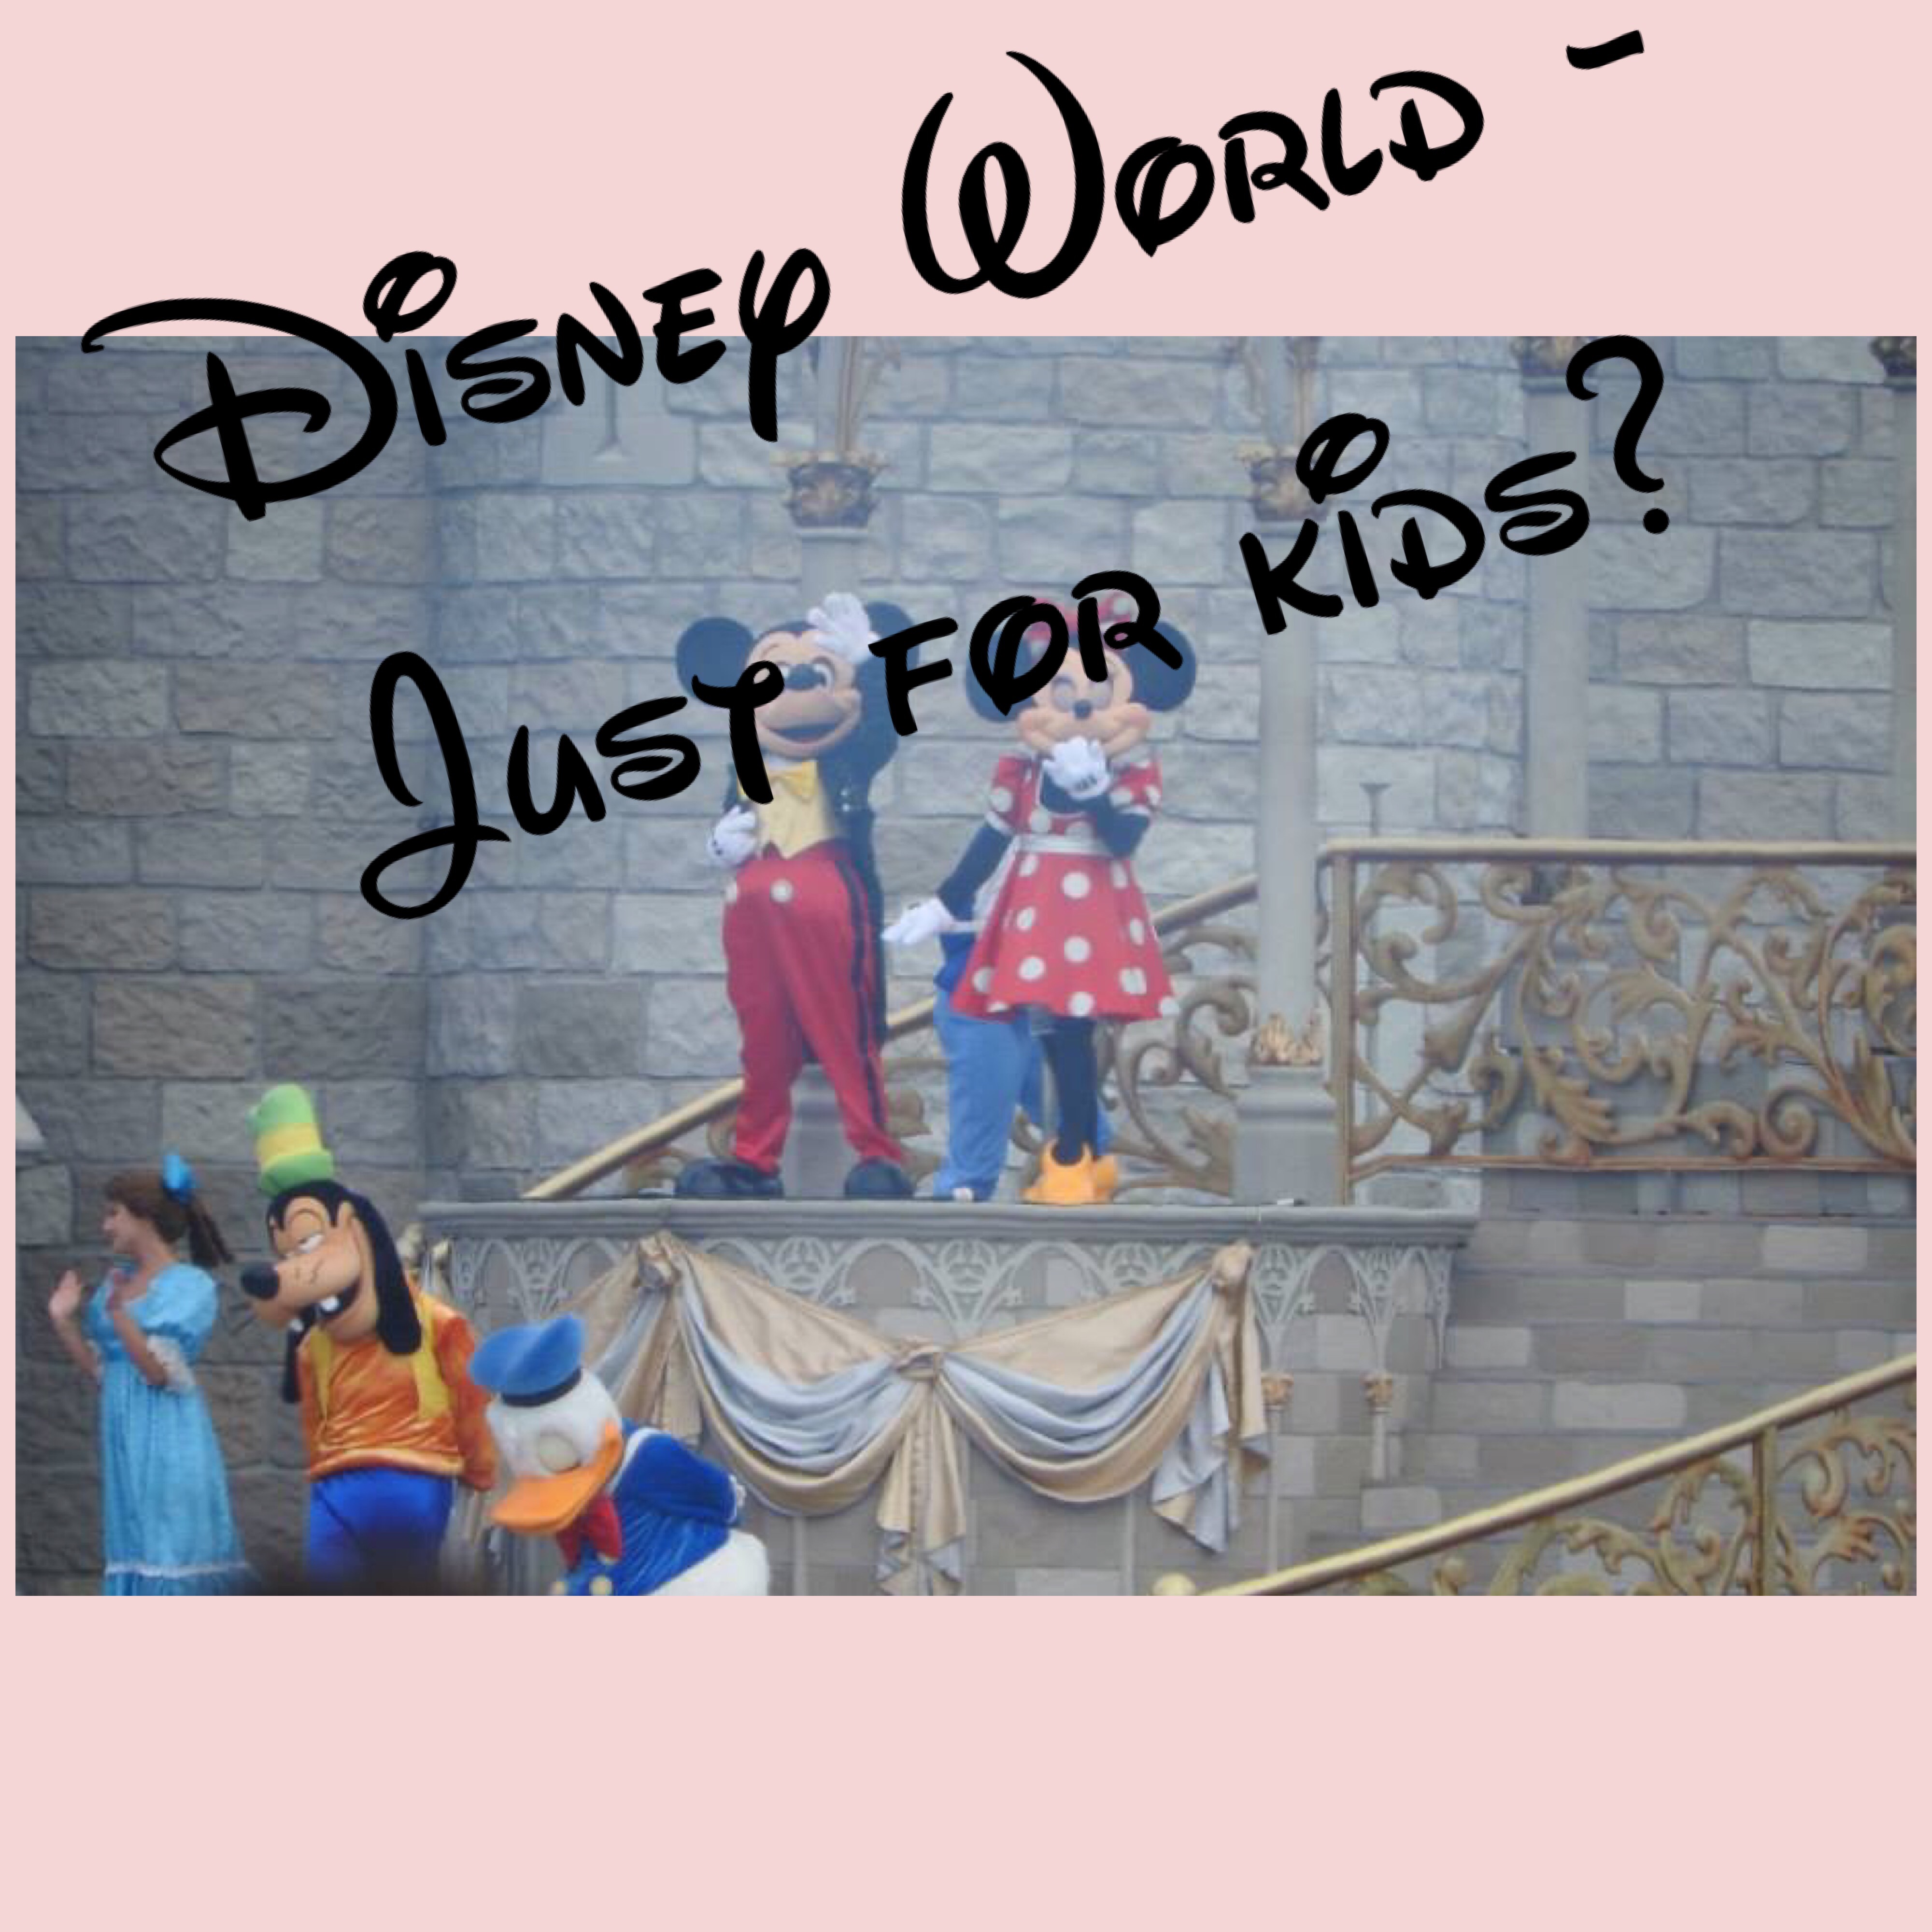 Walt Disney World – Just for kids?